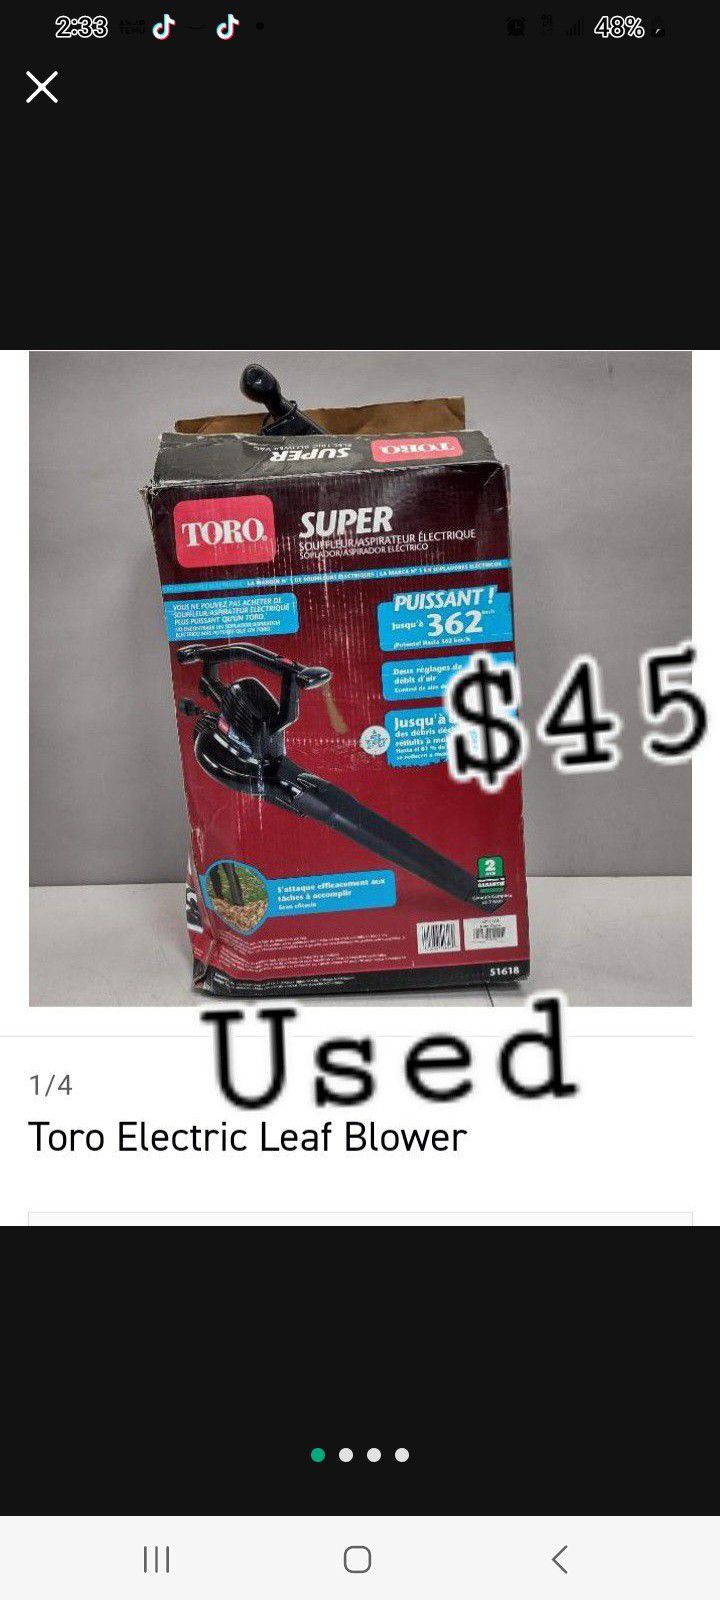 Toro Electric Leaf Blower

,    Used 